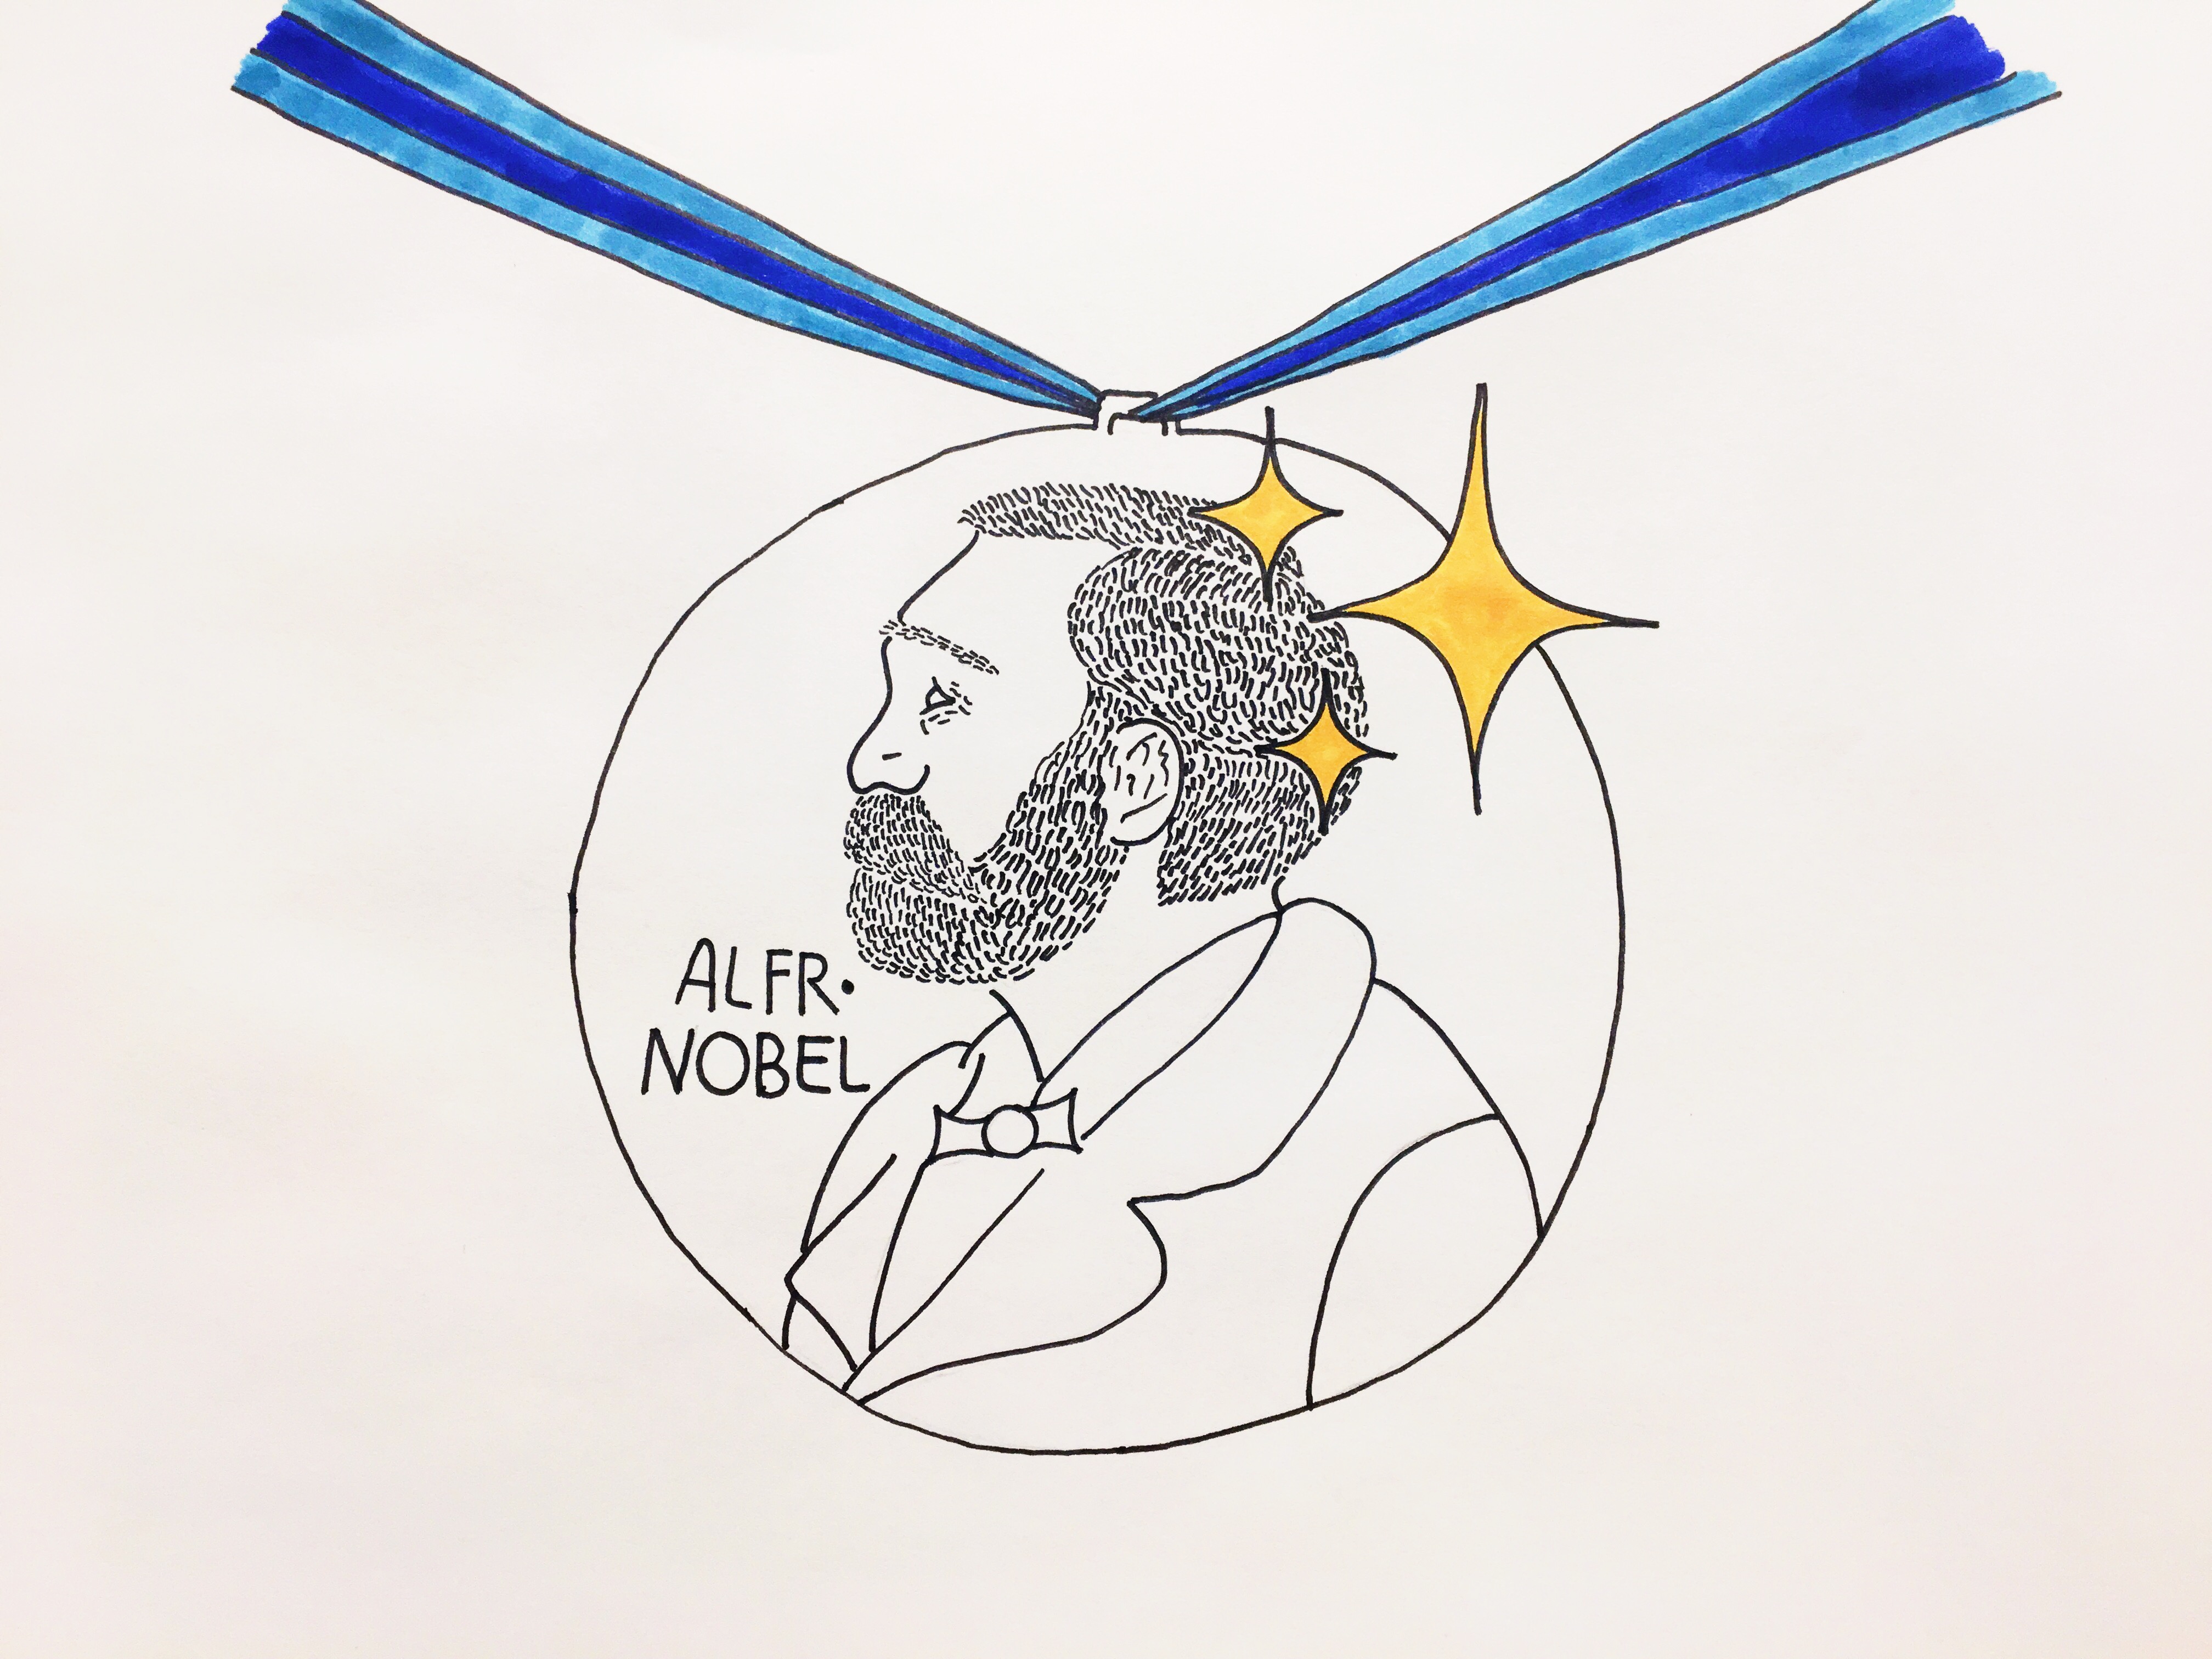 The Noble Nobel